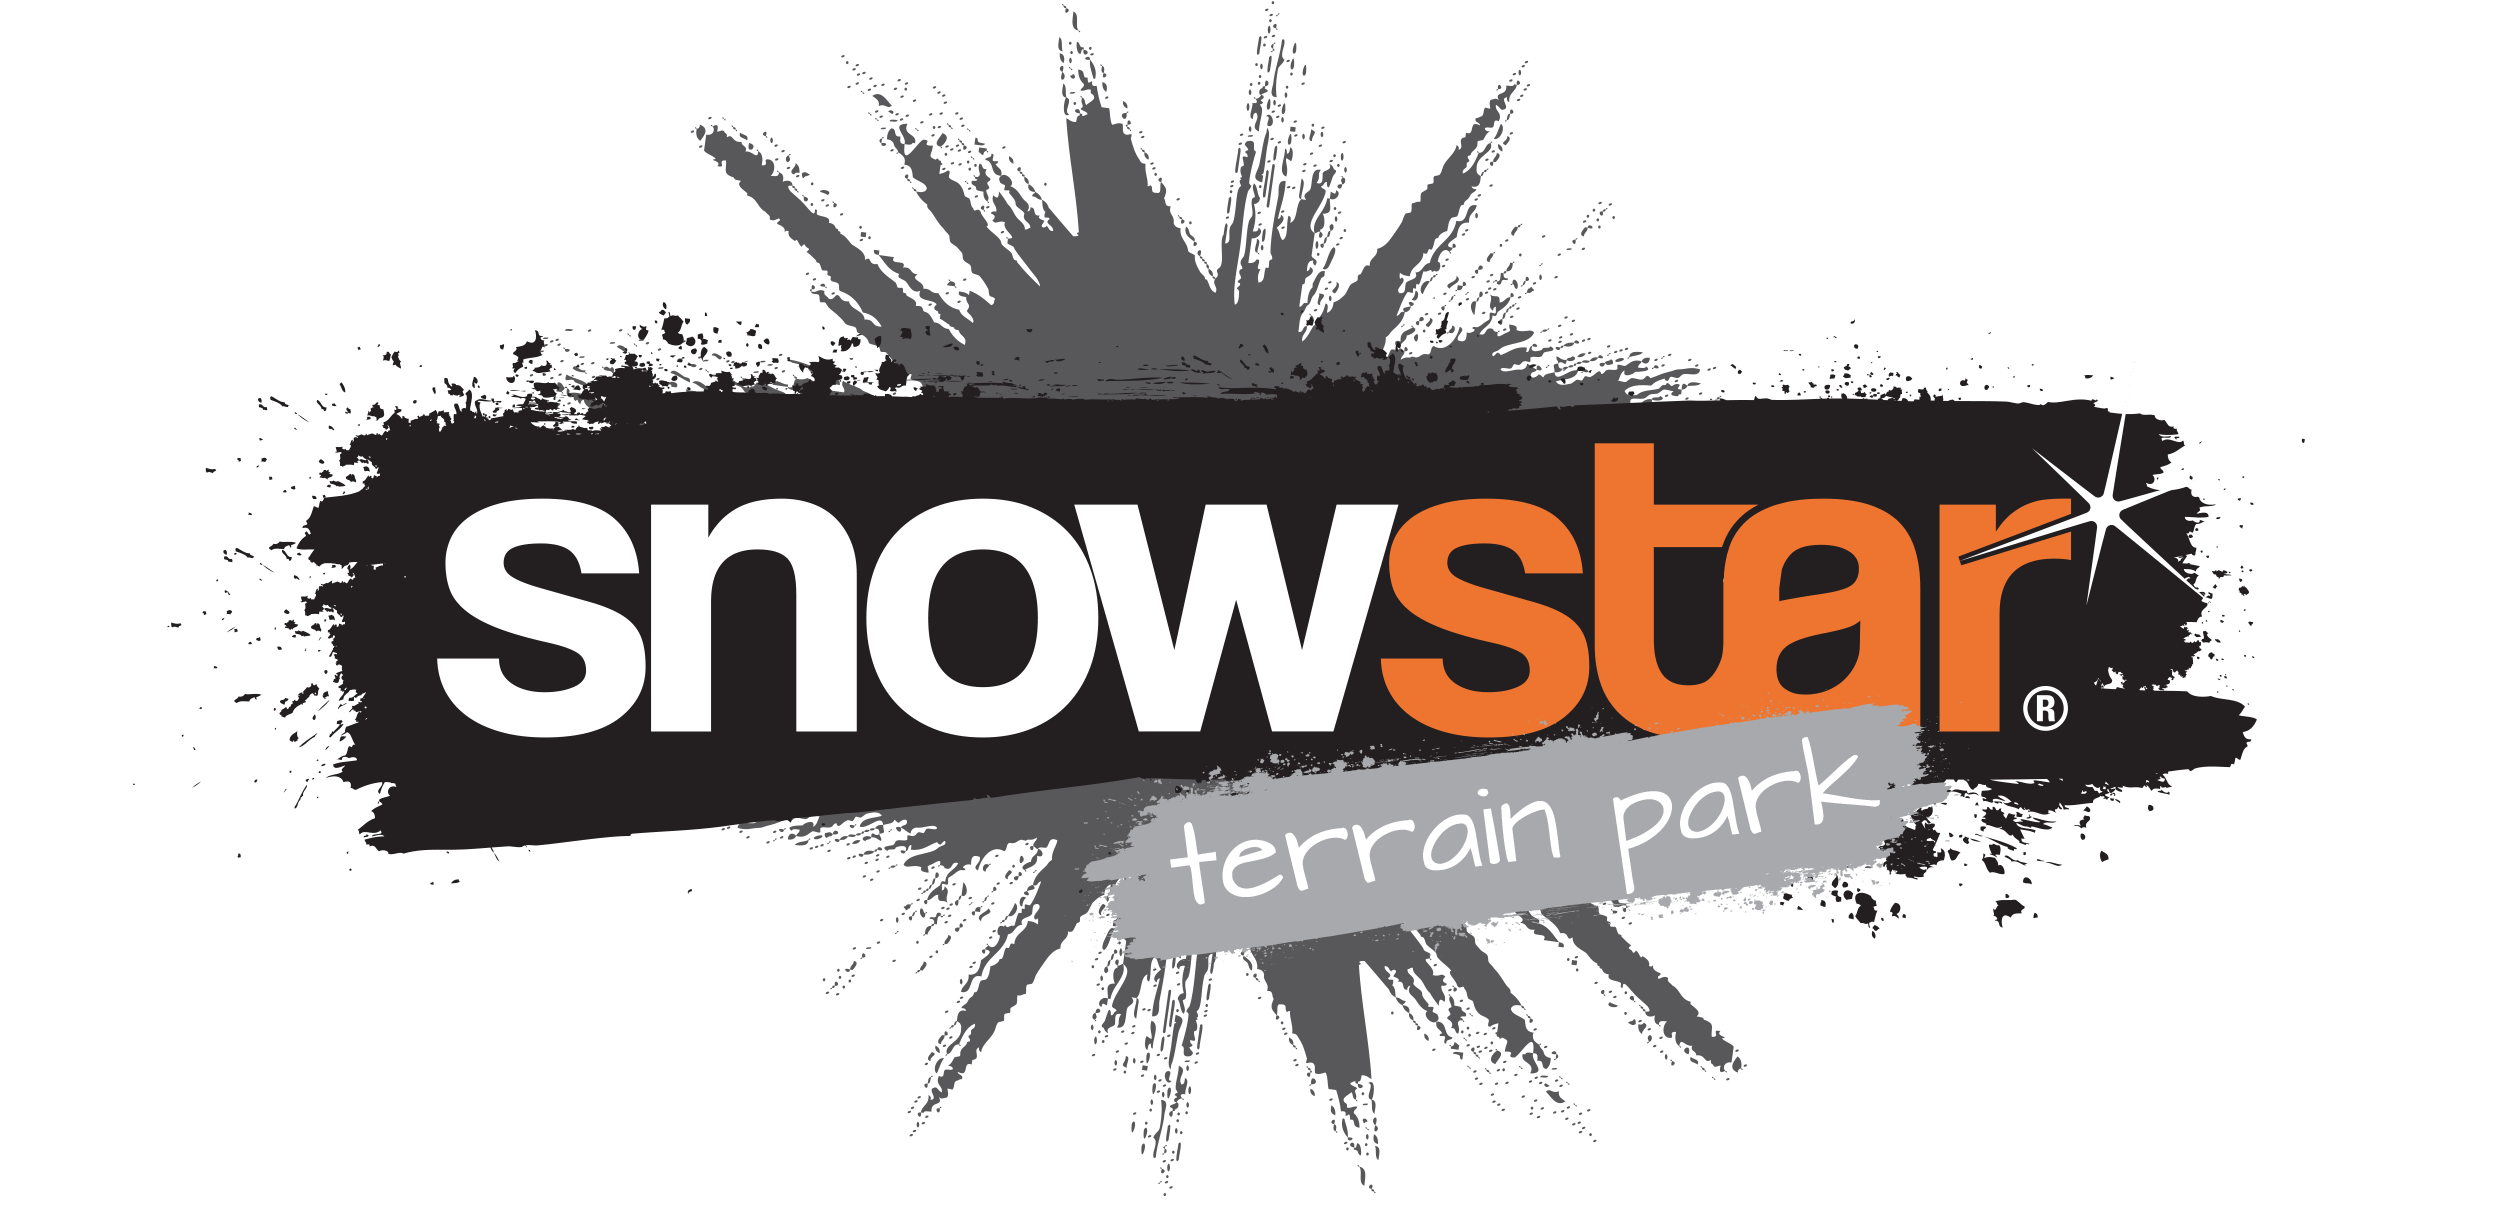 Snow Star Logo - Snowstar Winter Sports Park. terrain Park